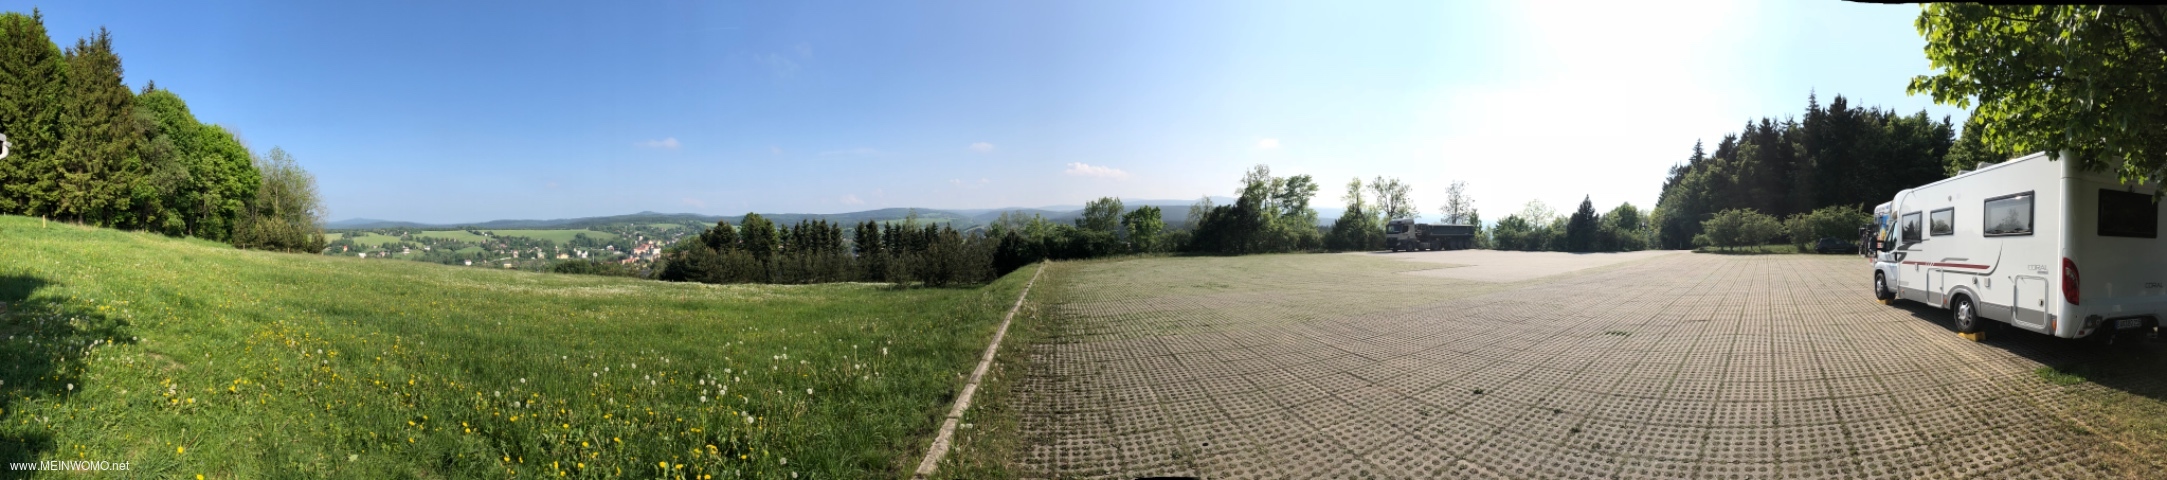  Vista panoramica sulla Repubblica Ceca